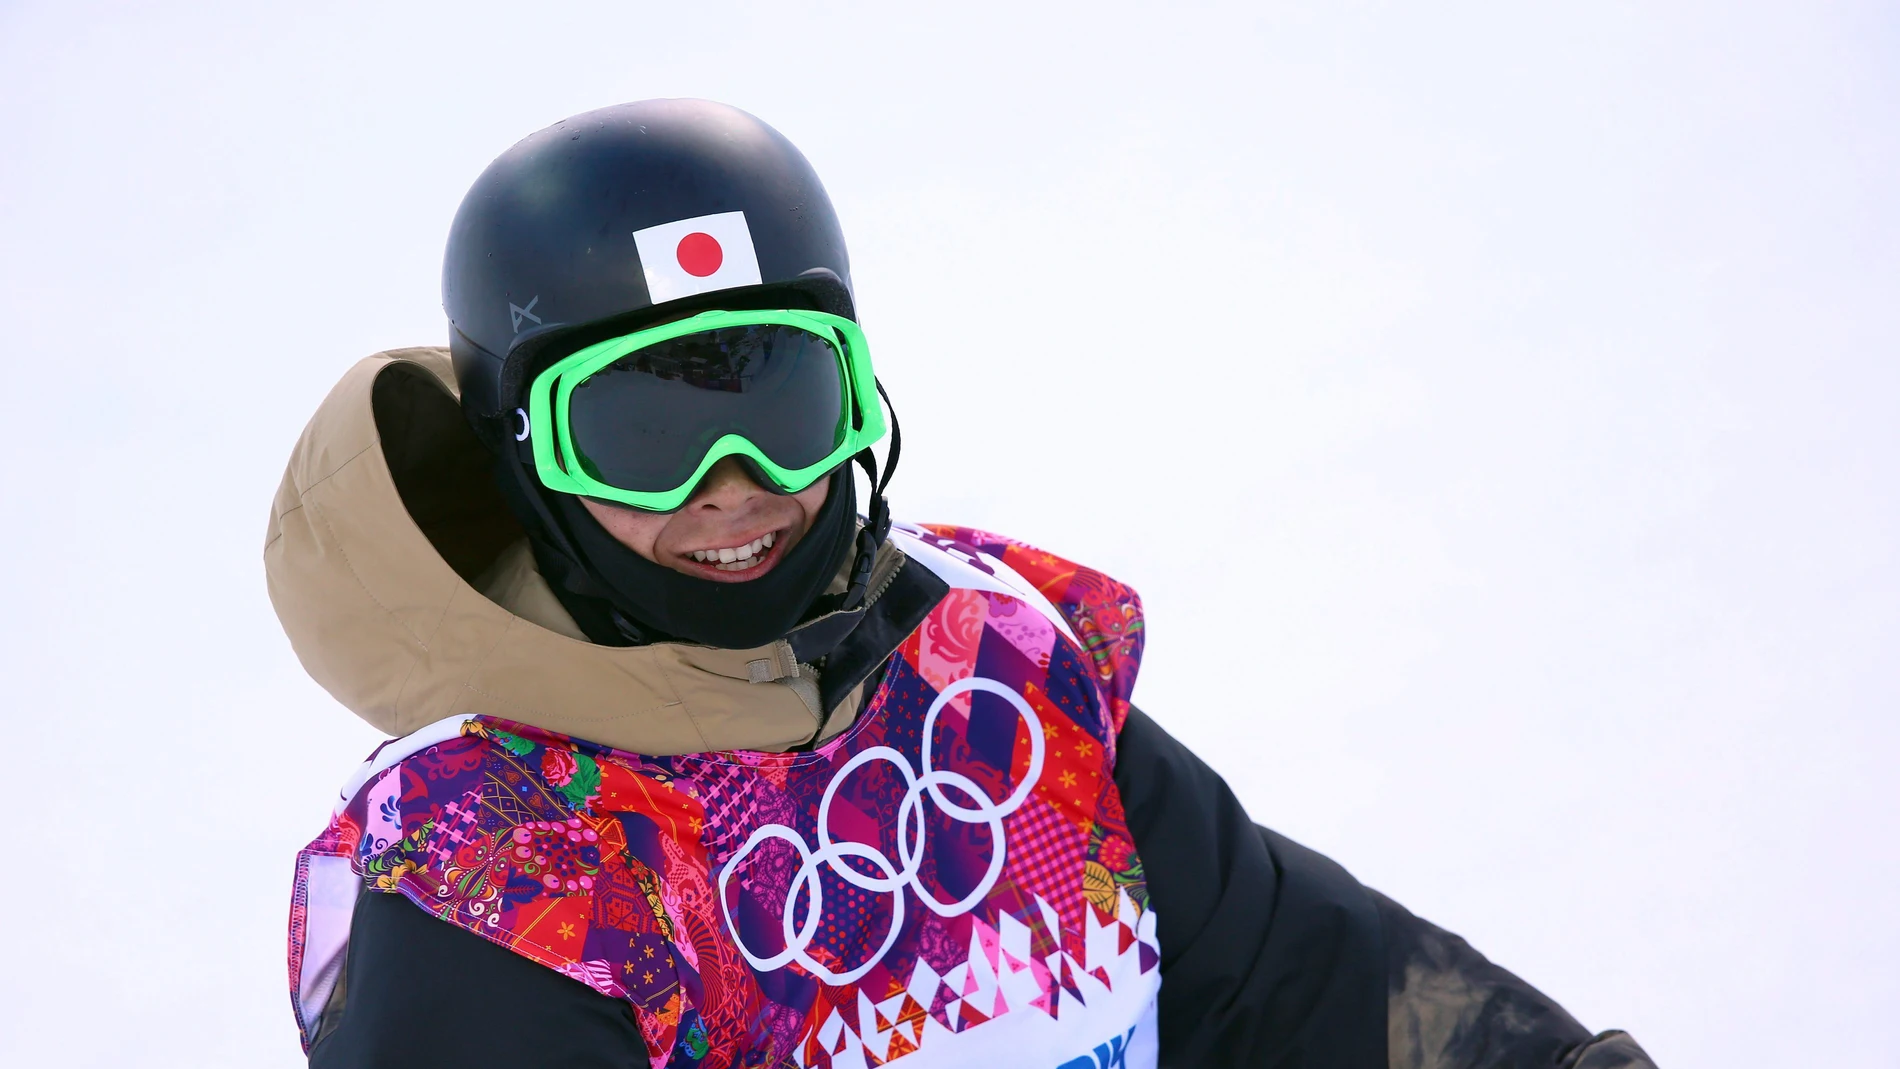  Taku Hiraoka, el medallista olímpico japonés de snowboard